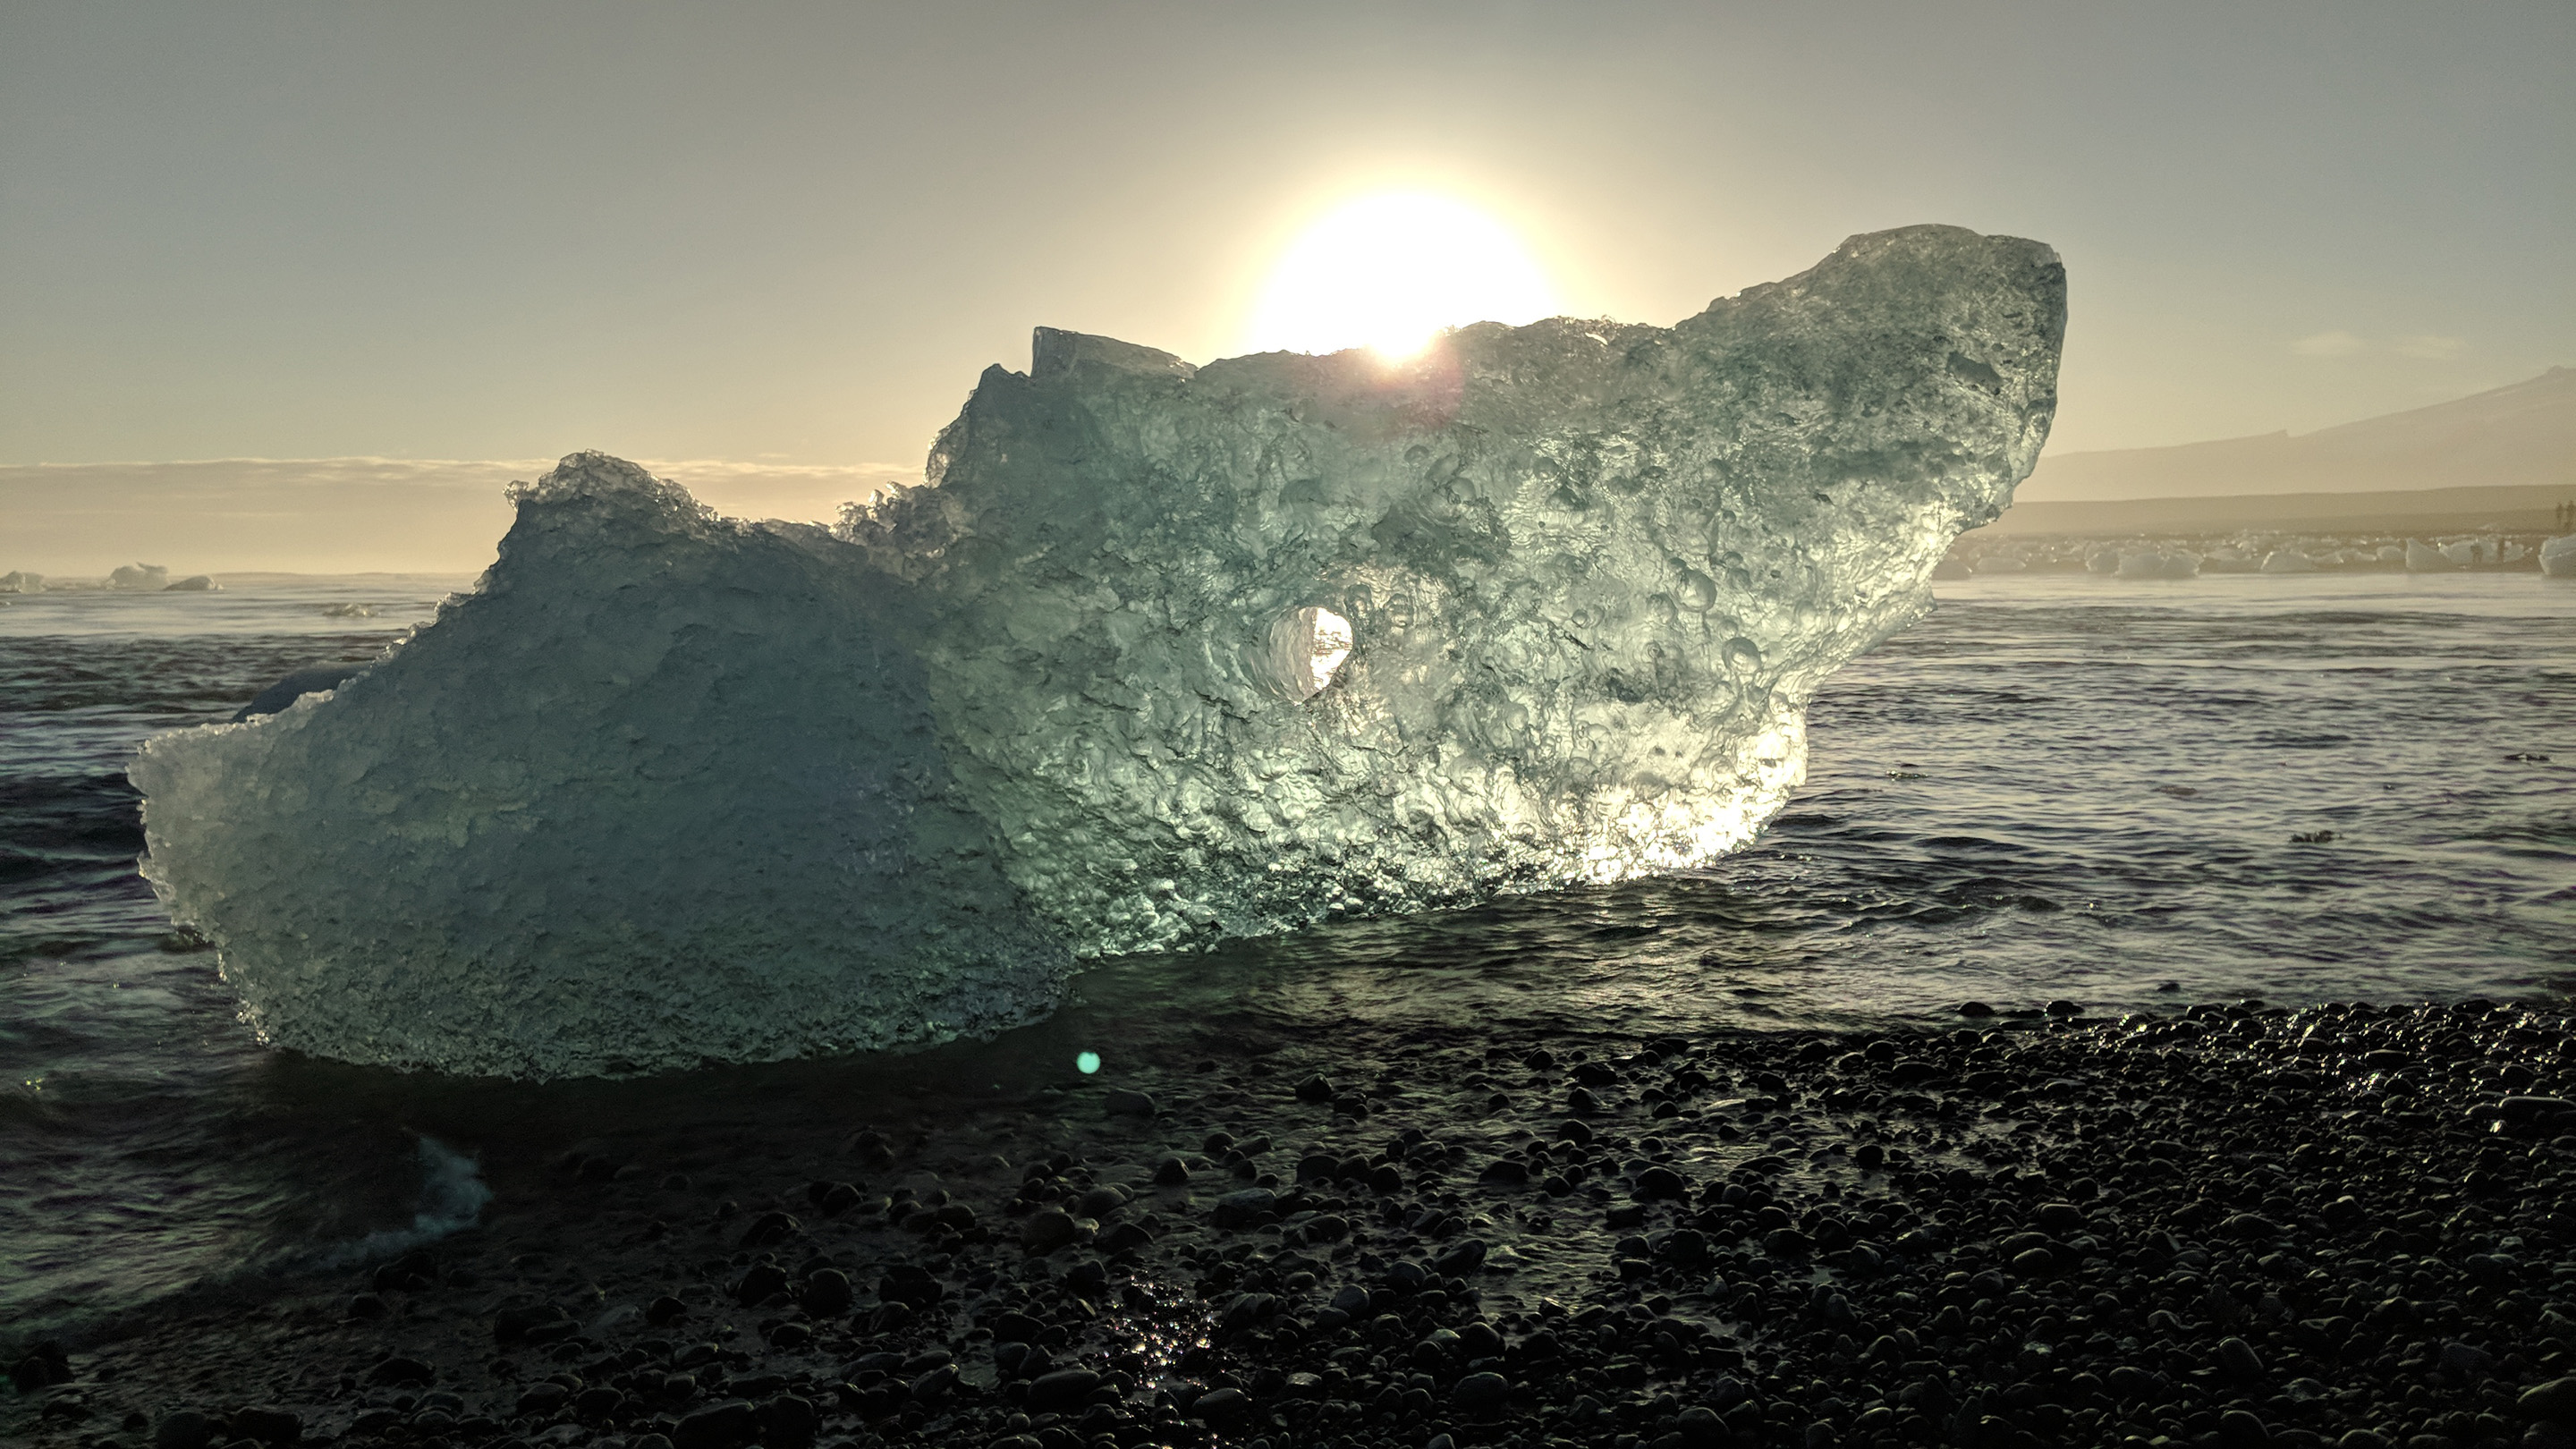 Pixel 2 glacier beach